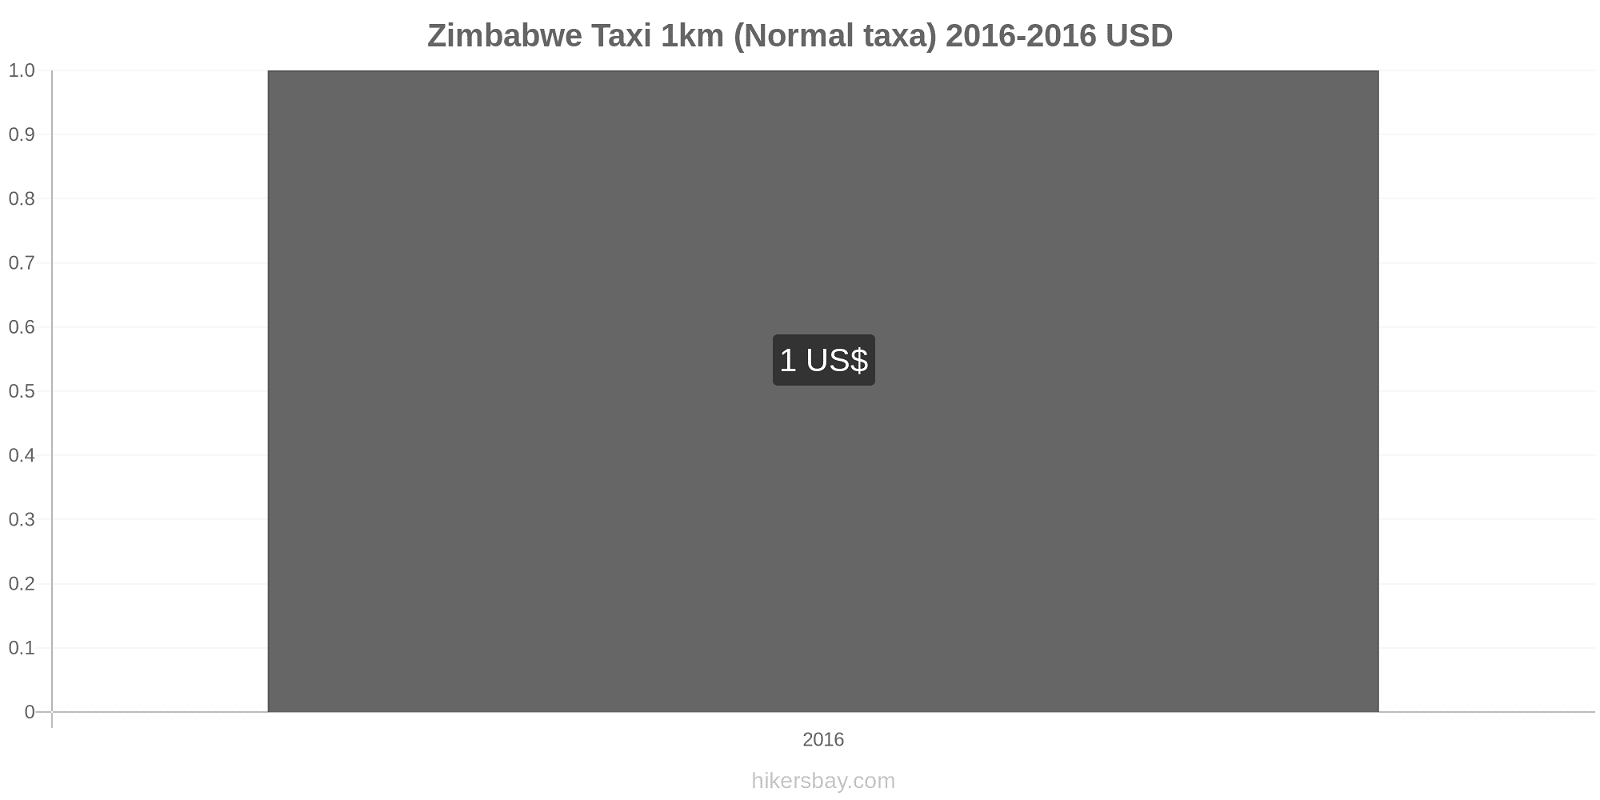 Zimbabwe prisändringar Taxi 1km (Normal taxa) hikersbay.com